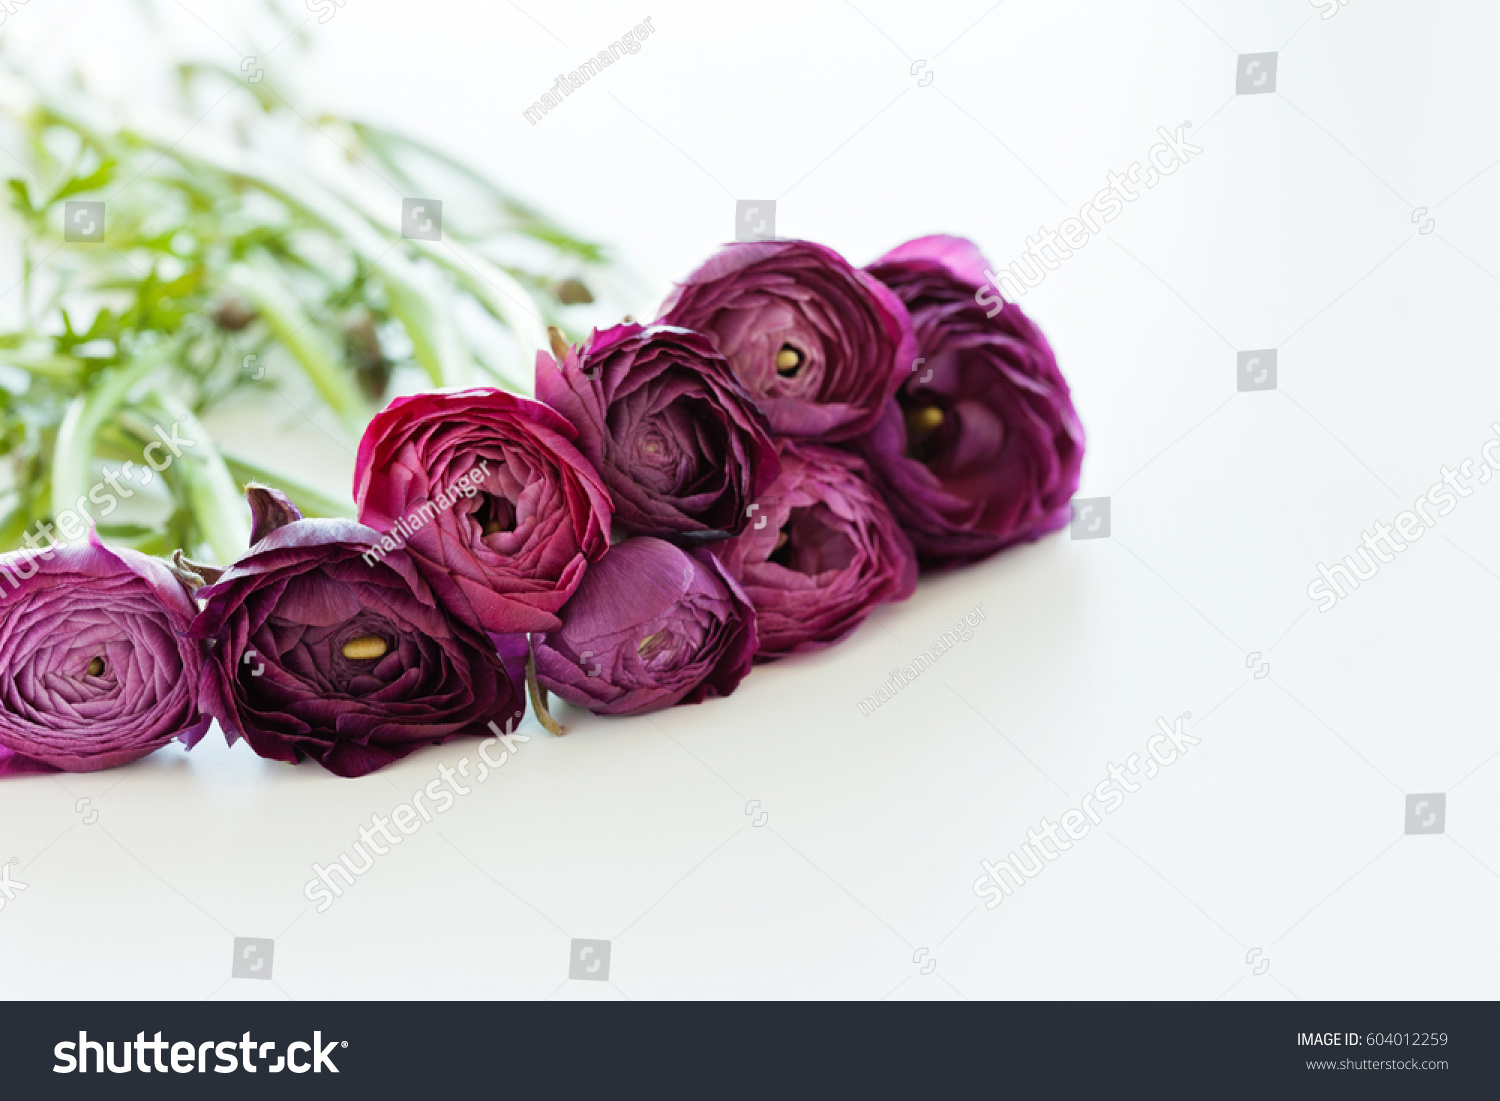 Bouquet Dark Burgundy Ranunculus Flowers On Stock Photo Edit Now 604012259